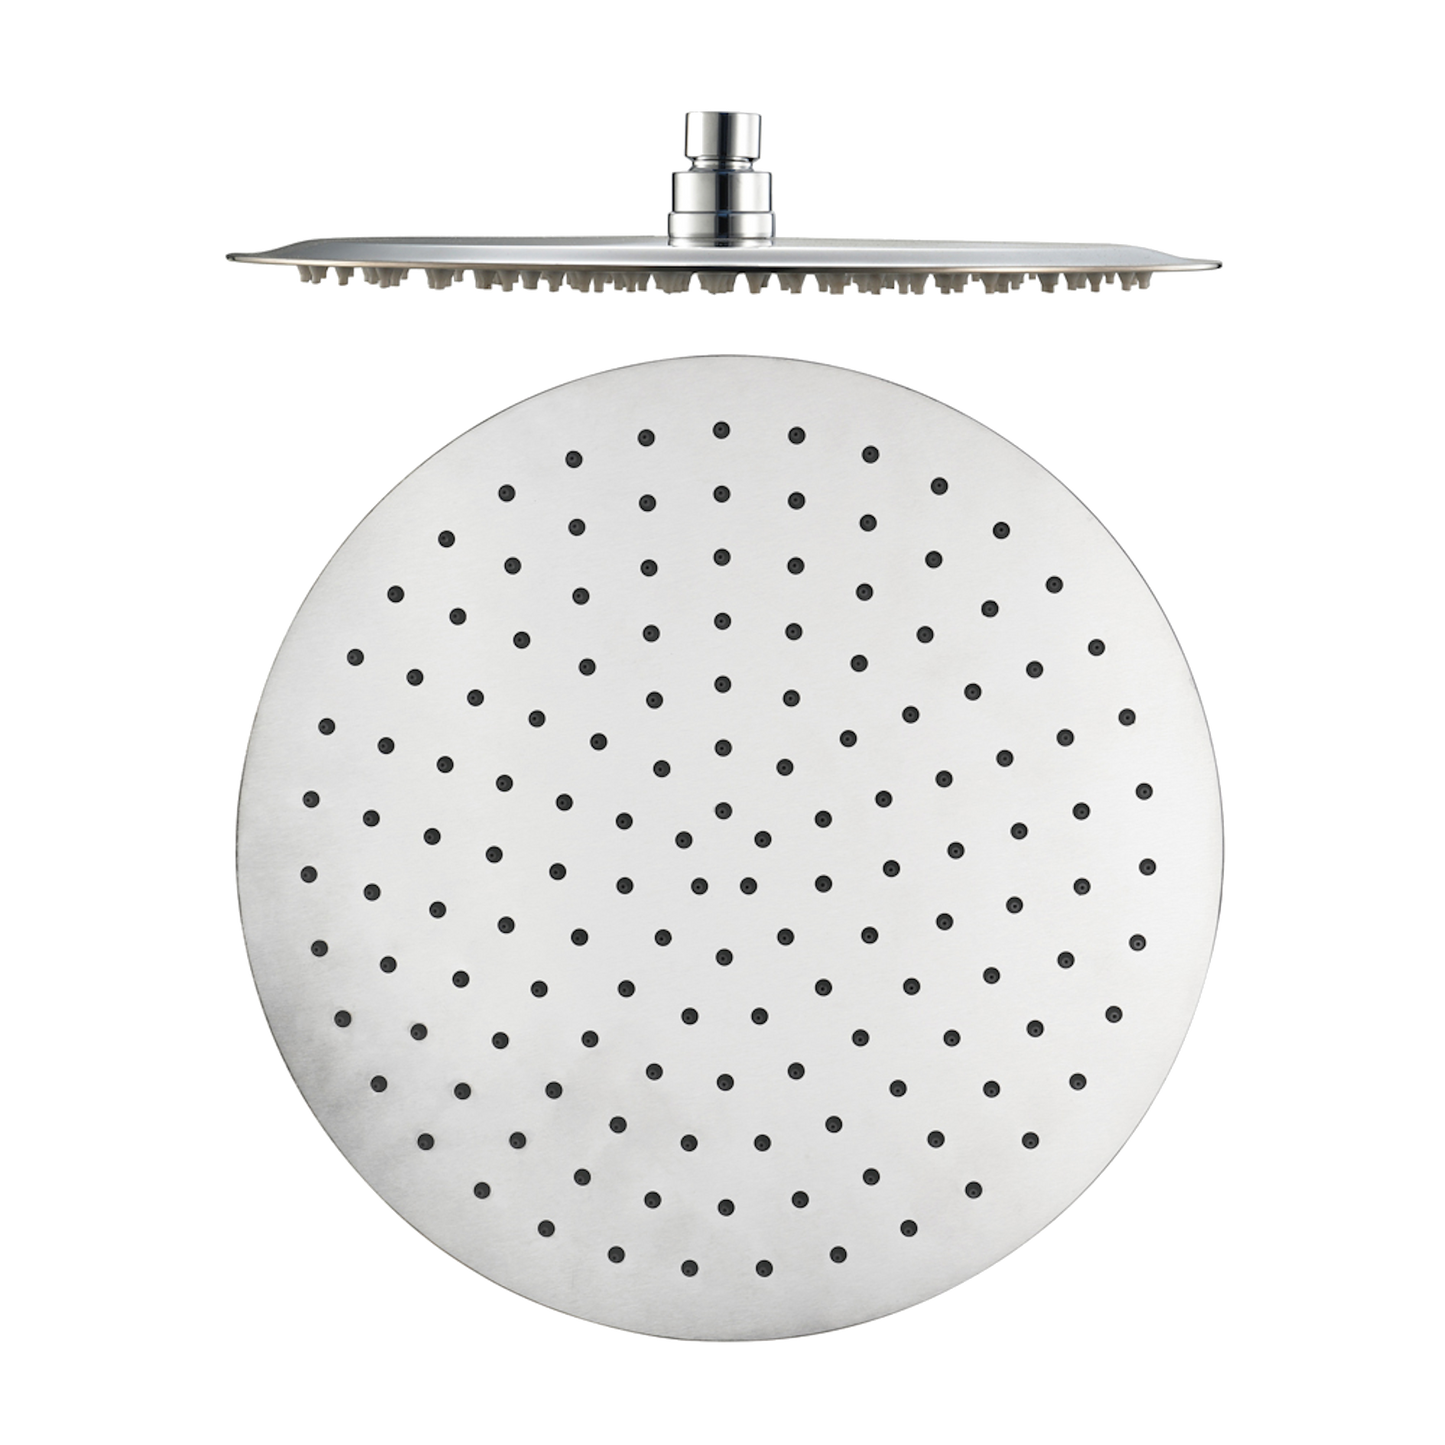 Round ultra slim shower head stainless steel 300mm - chrome - Showers